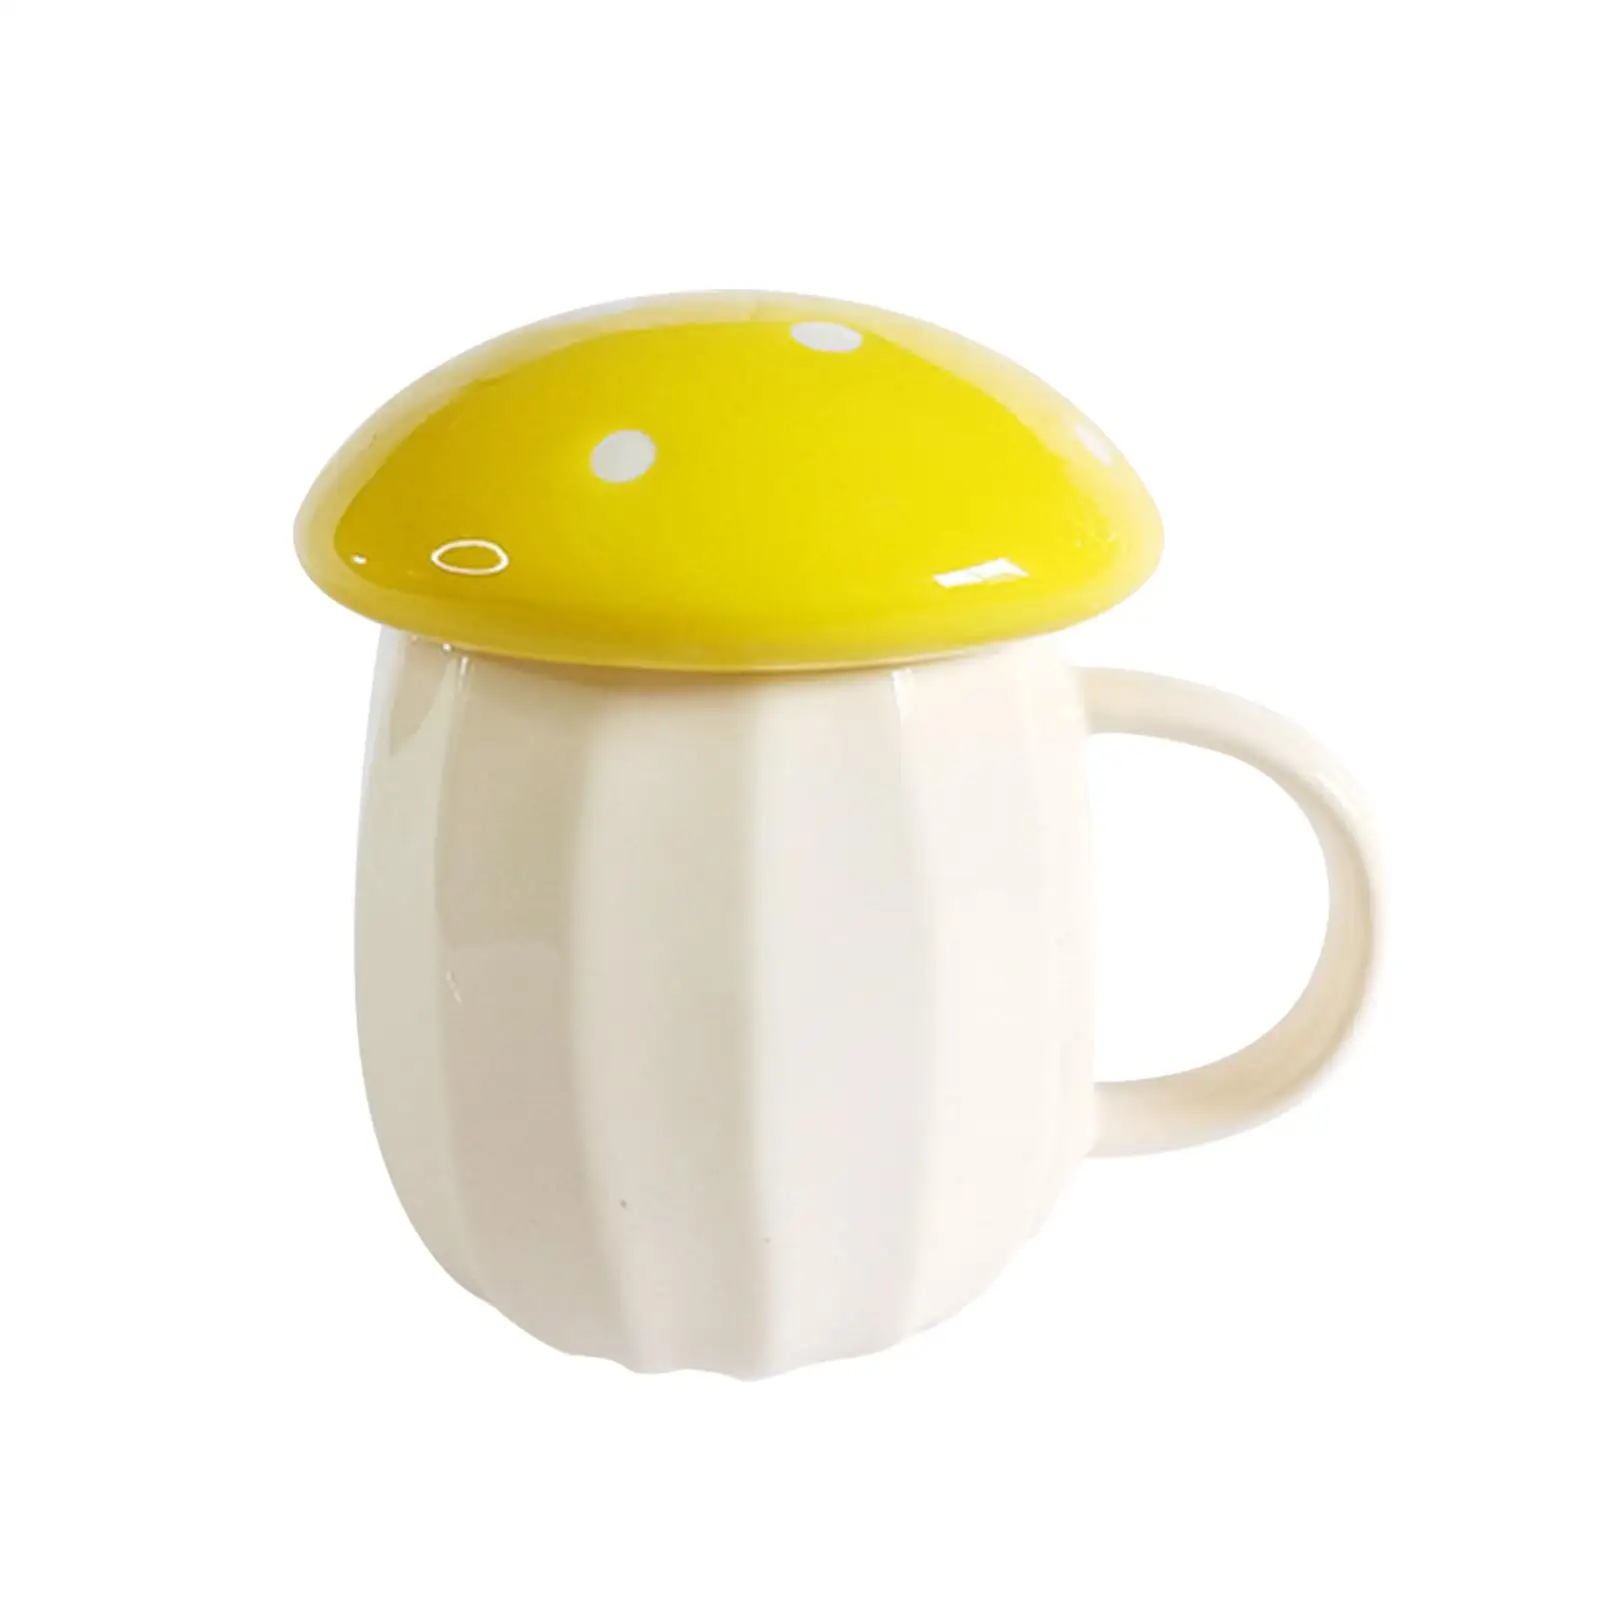 Creative Mushroom Cup Mug Water Bottle Handmade Gifts Durable with Lid Drinkware for Tea Beverage Home Kitchen Breakfast